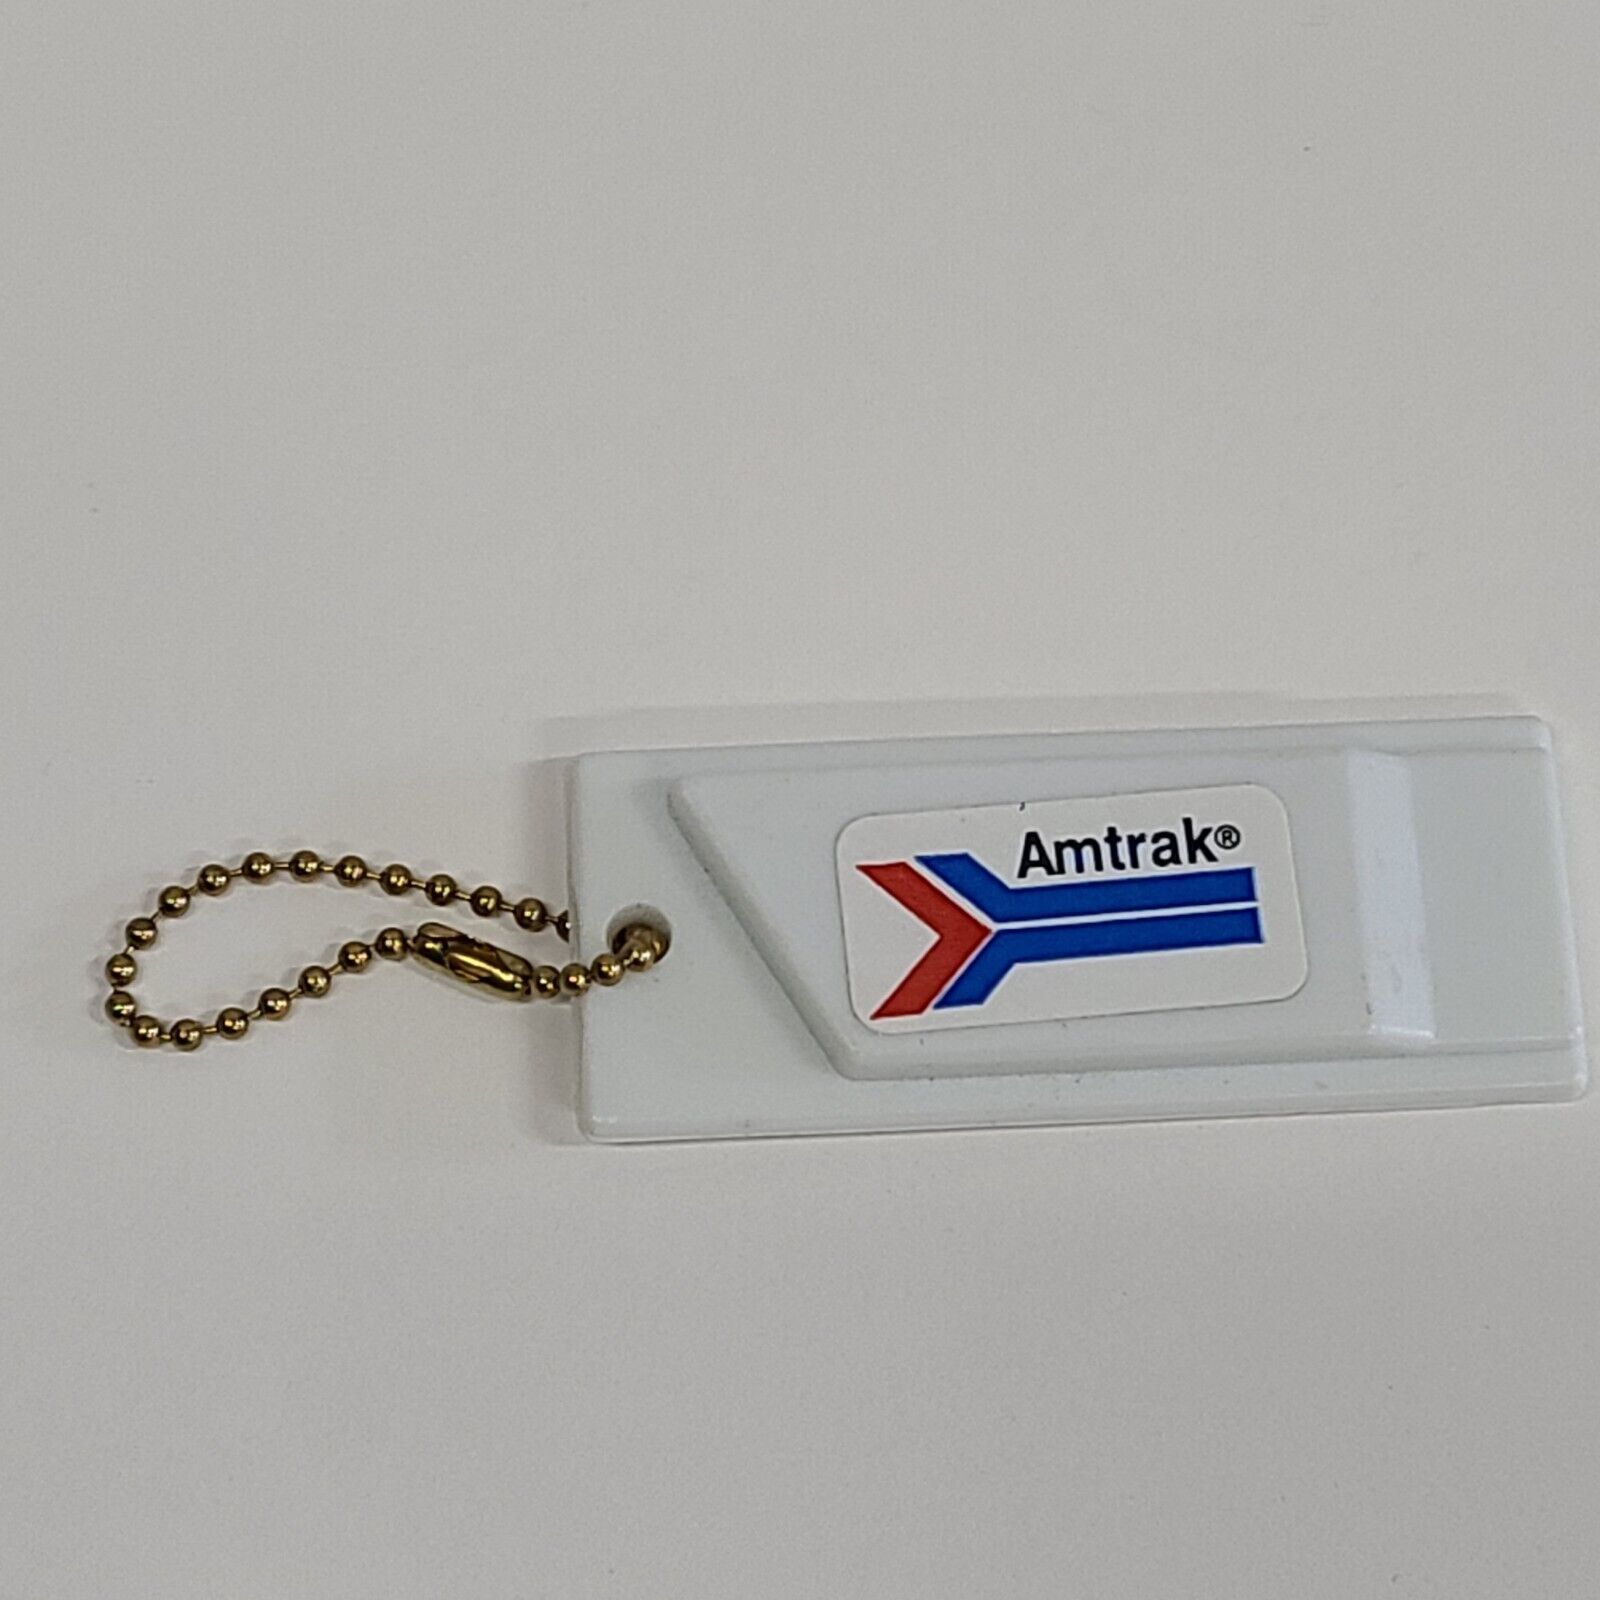 Vintage Amtrak Whistle Keychain Railroad Advertising New Old Stock Item